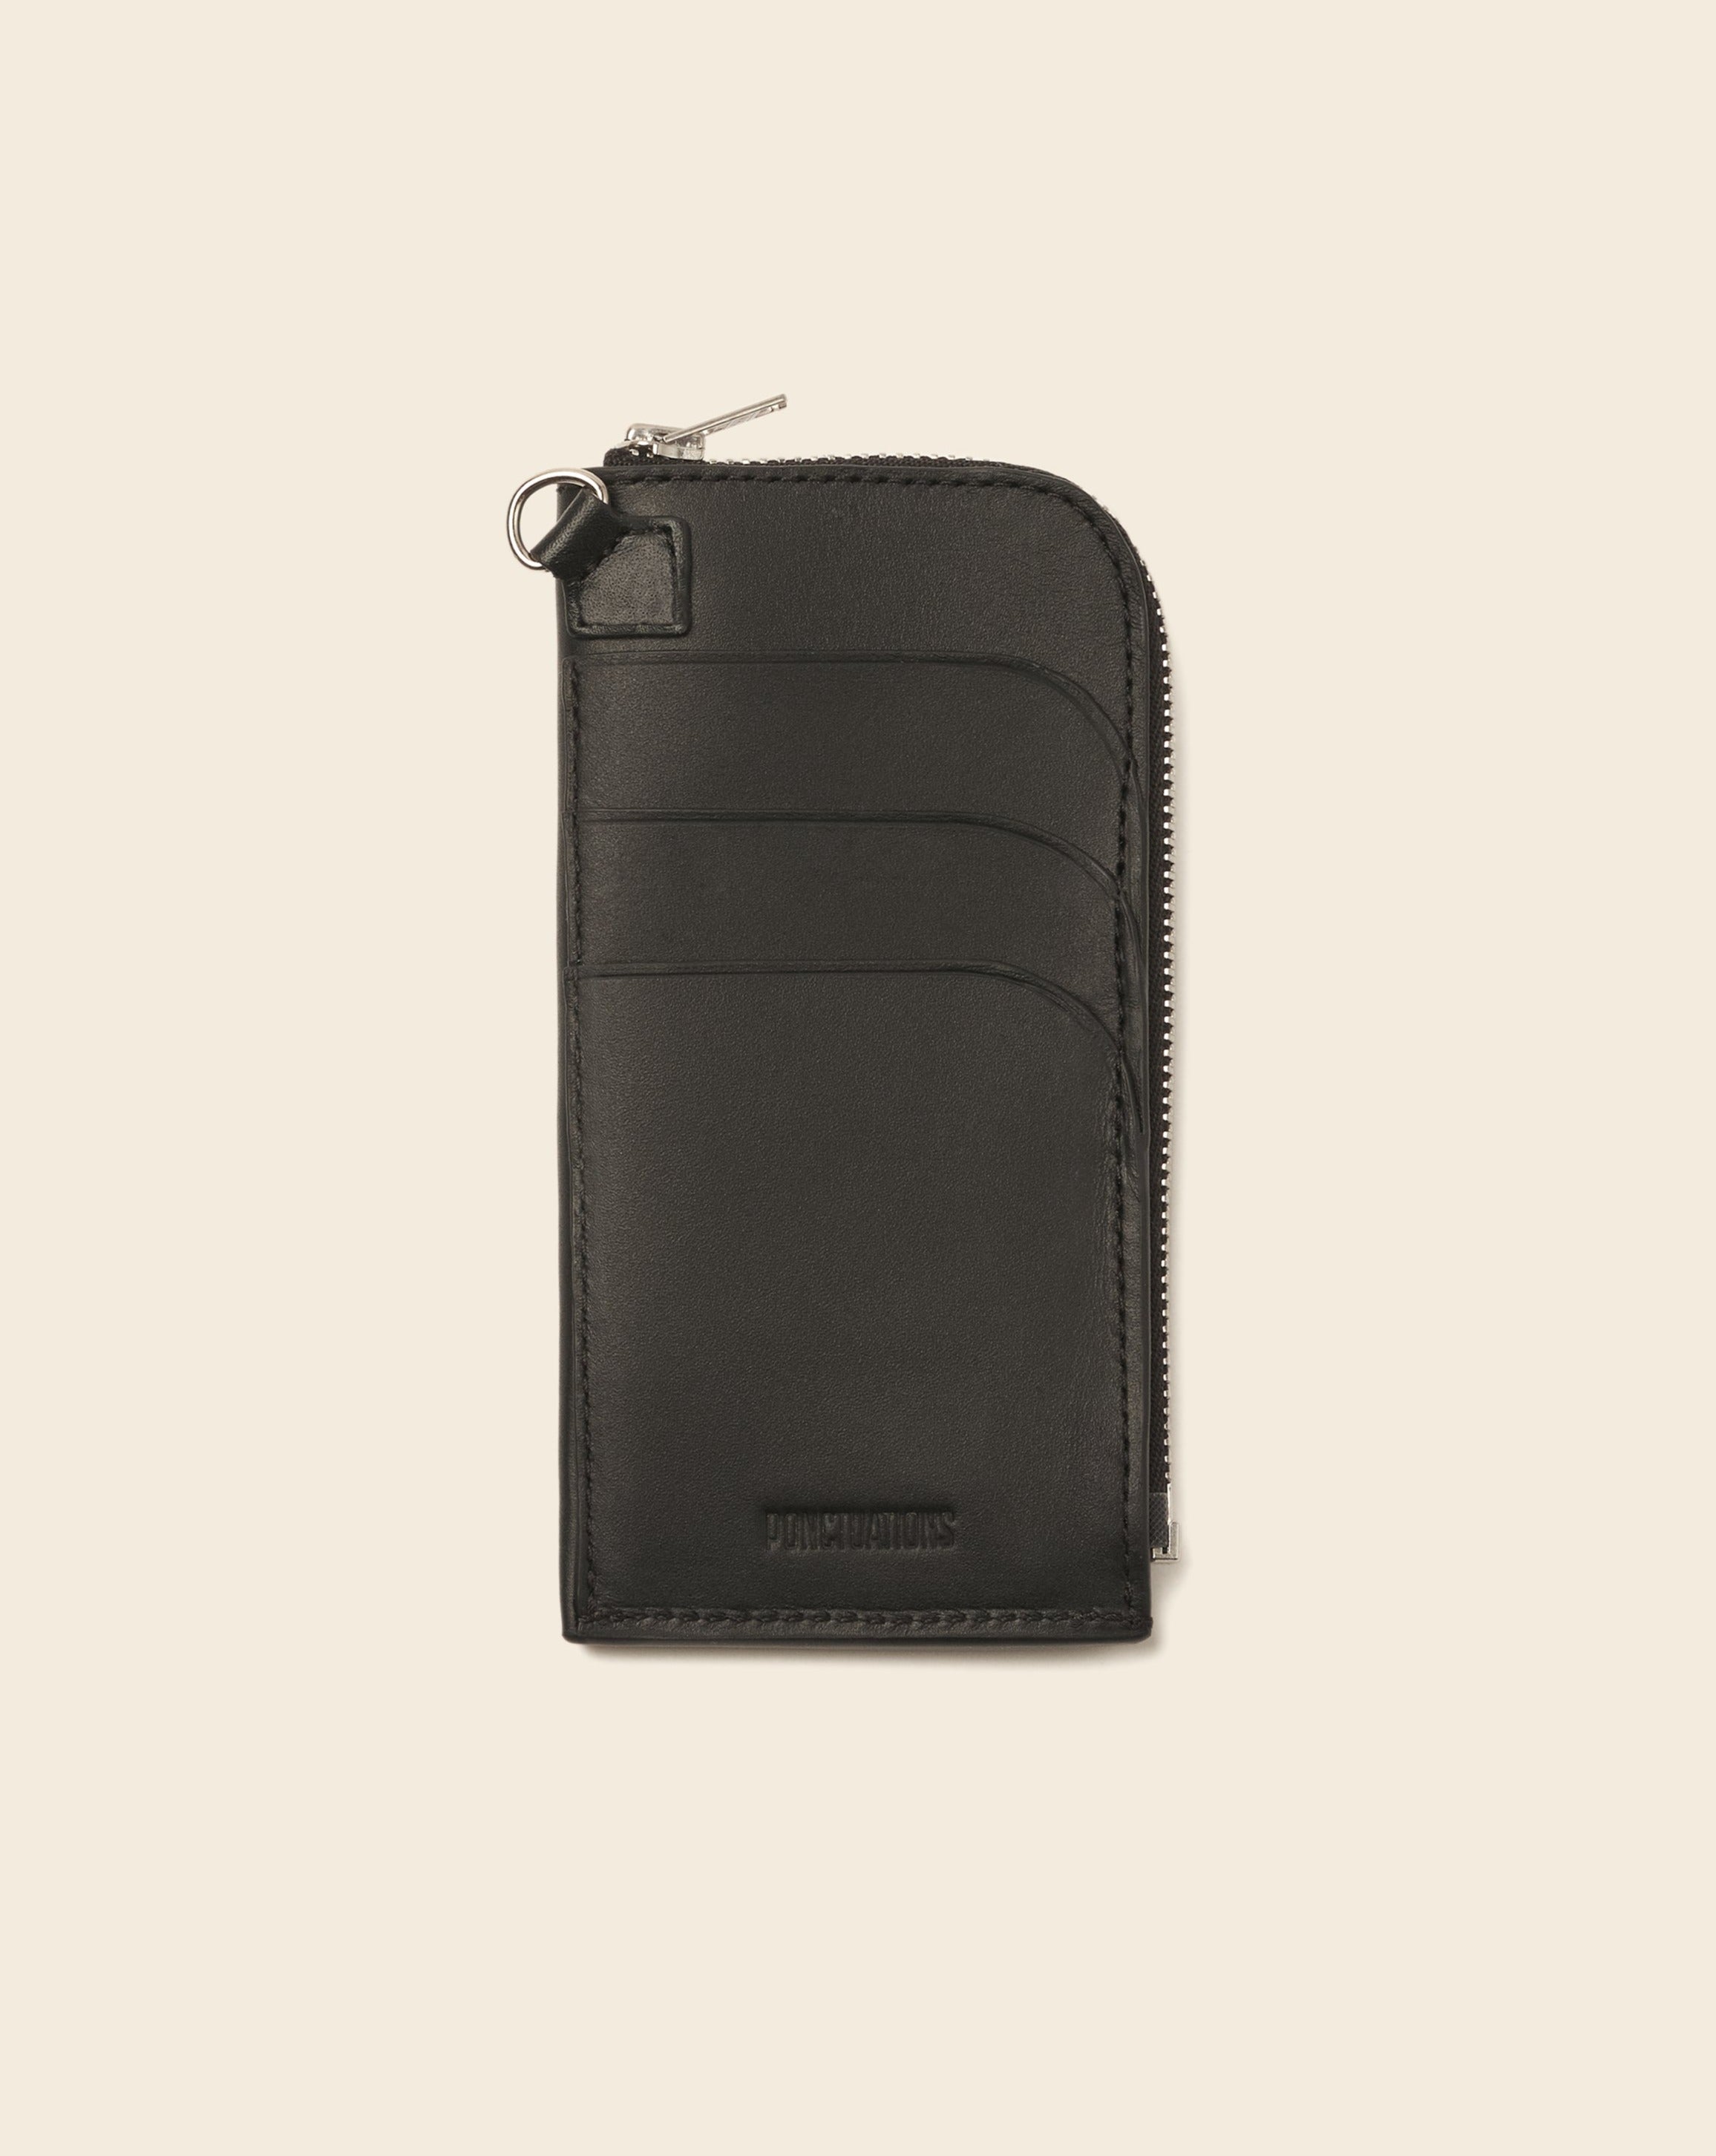 DAKOTA - Zipped card holder - Black leather & multicolored embroidery